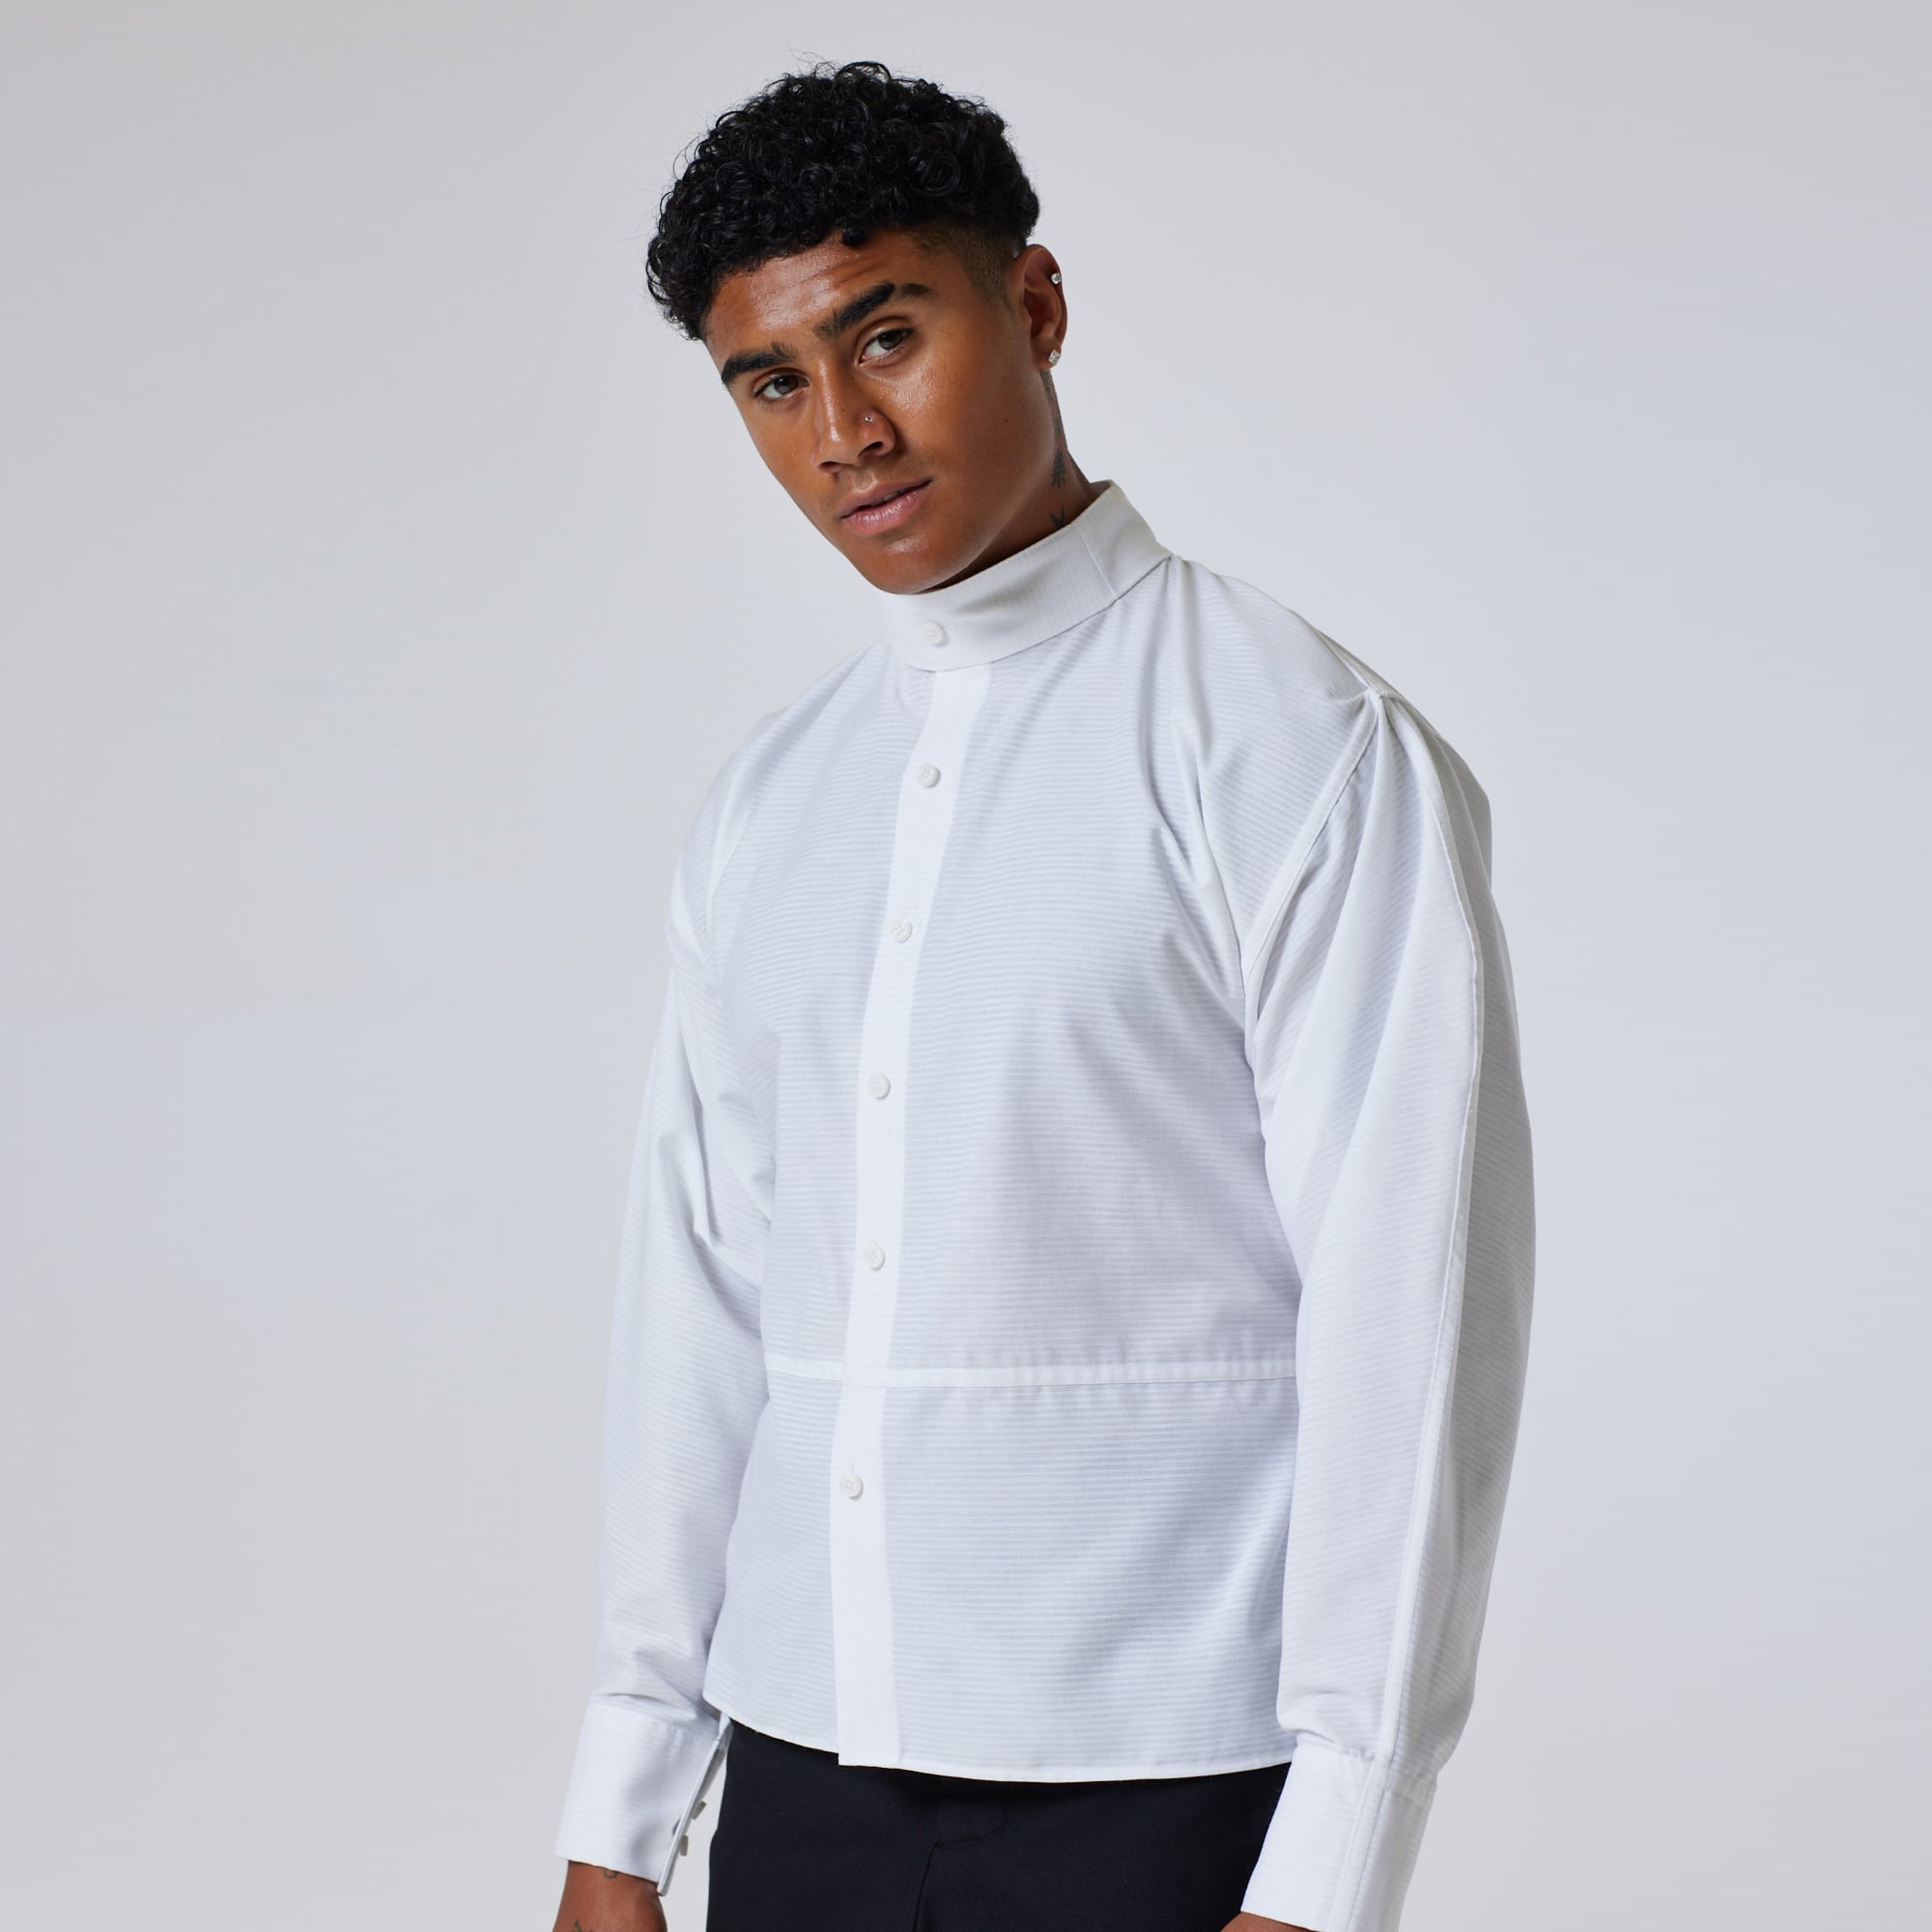 ZERØ London - Mid length view, mens luxury white dress shirt, zero waste fashion, designed & made in London